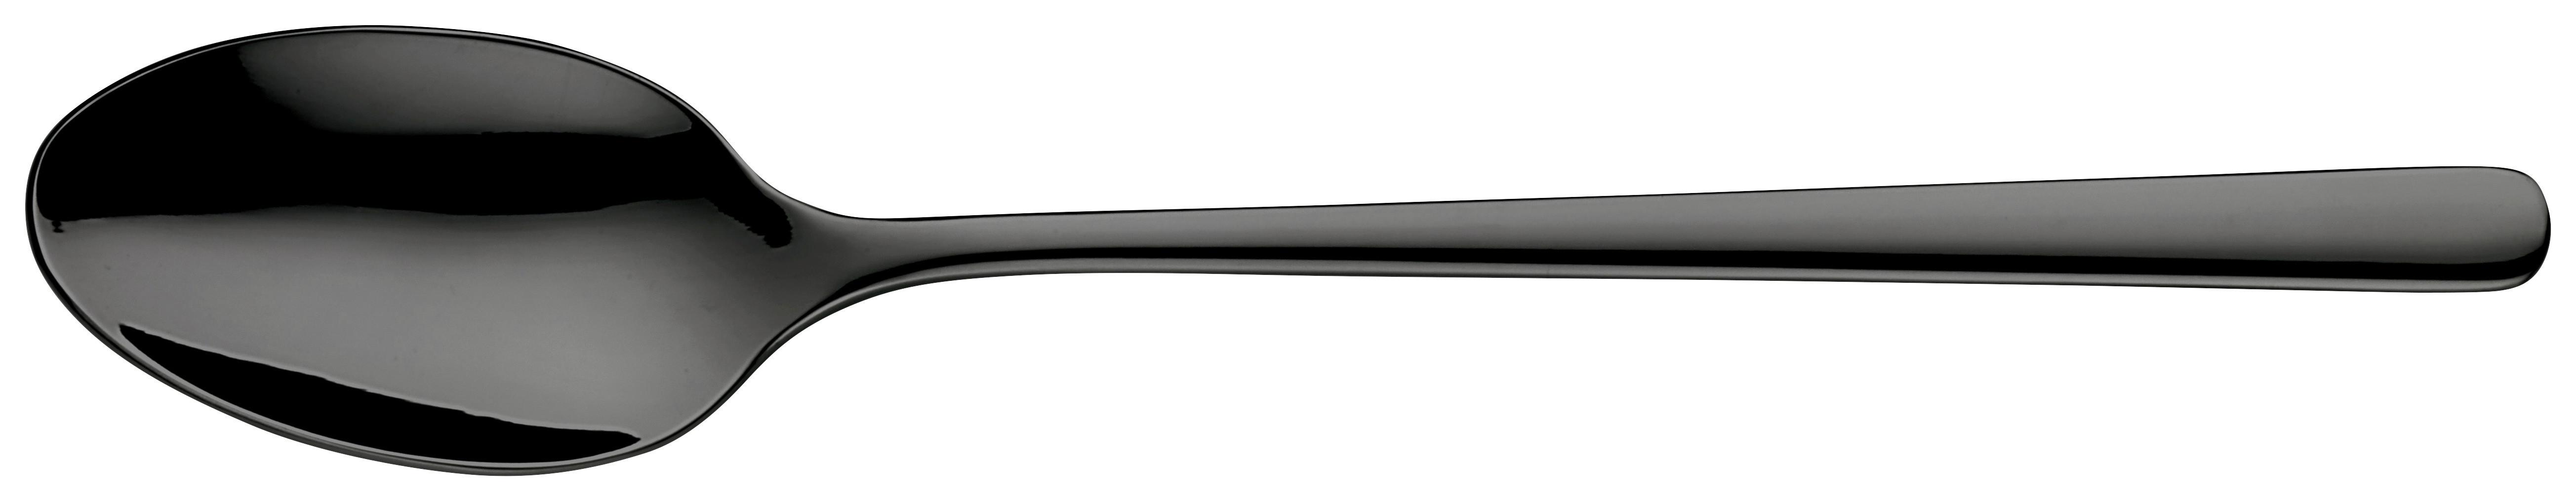 Lžíce Black, Dĺžka: 20cm - černá, Moderní, kov (20,3cm) - Premium Living